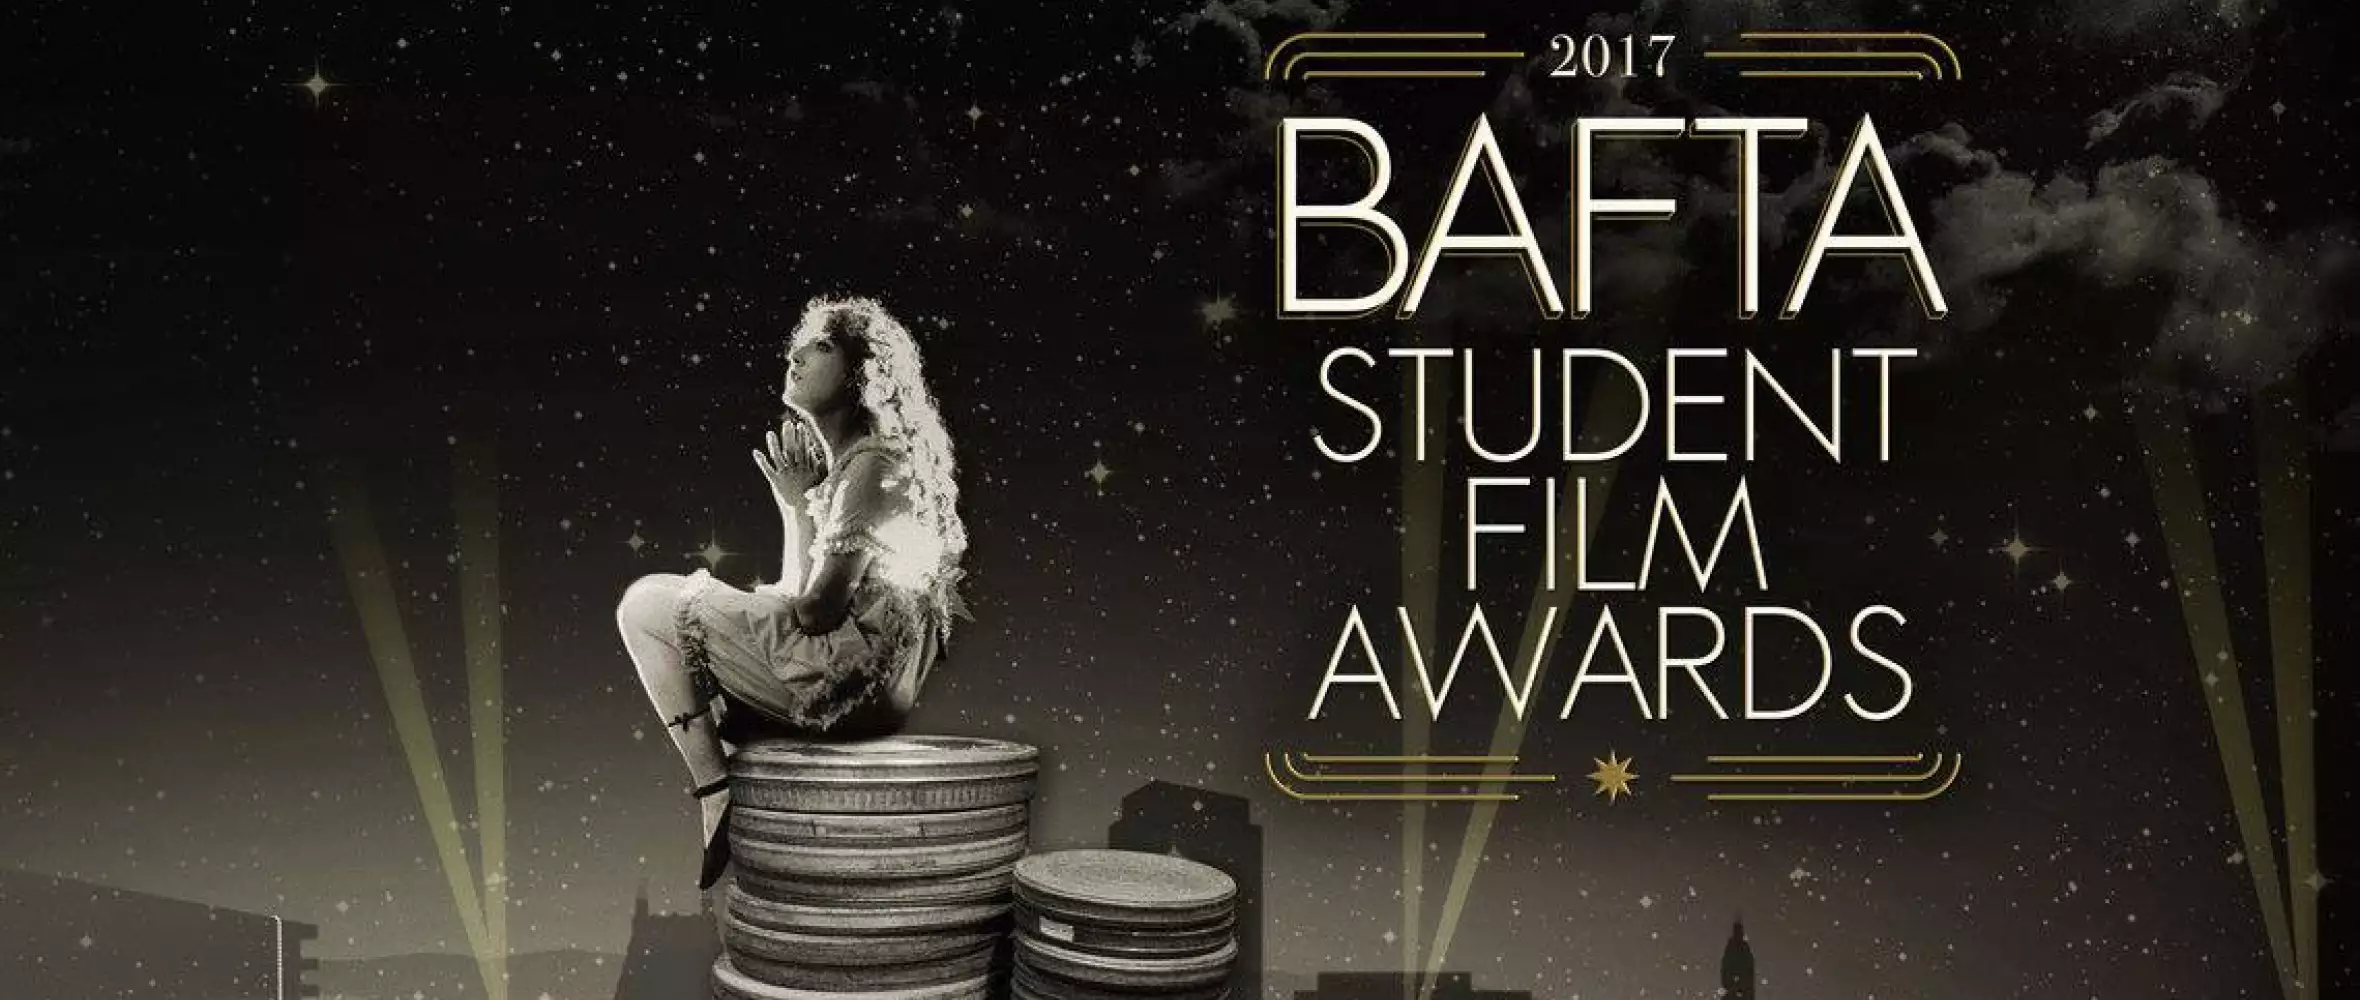 Two Student Films Selected for BAFTA Student Film Awards